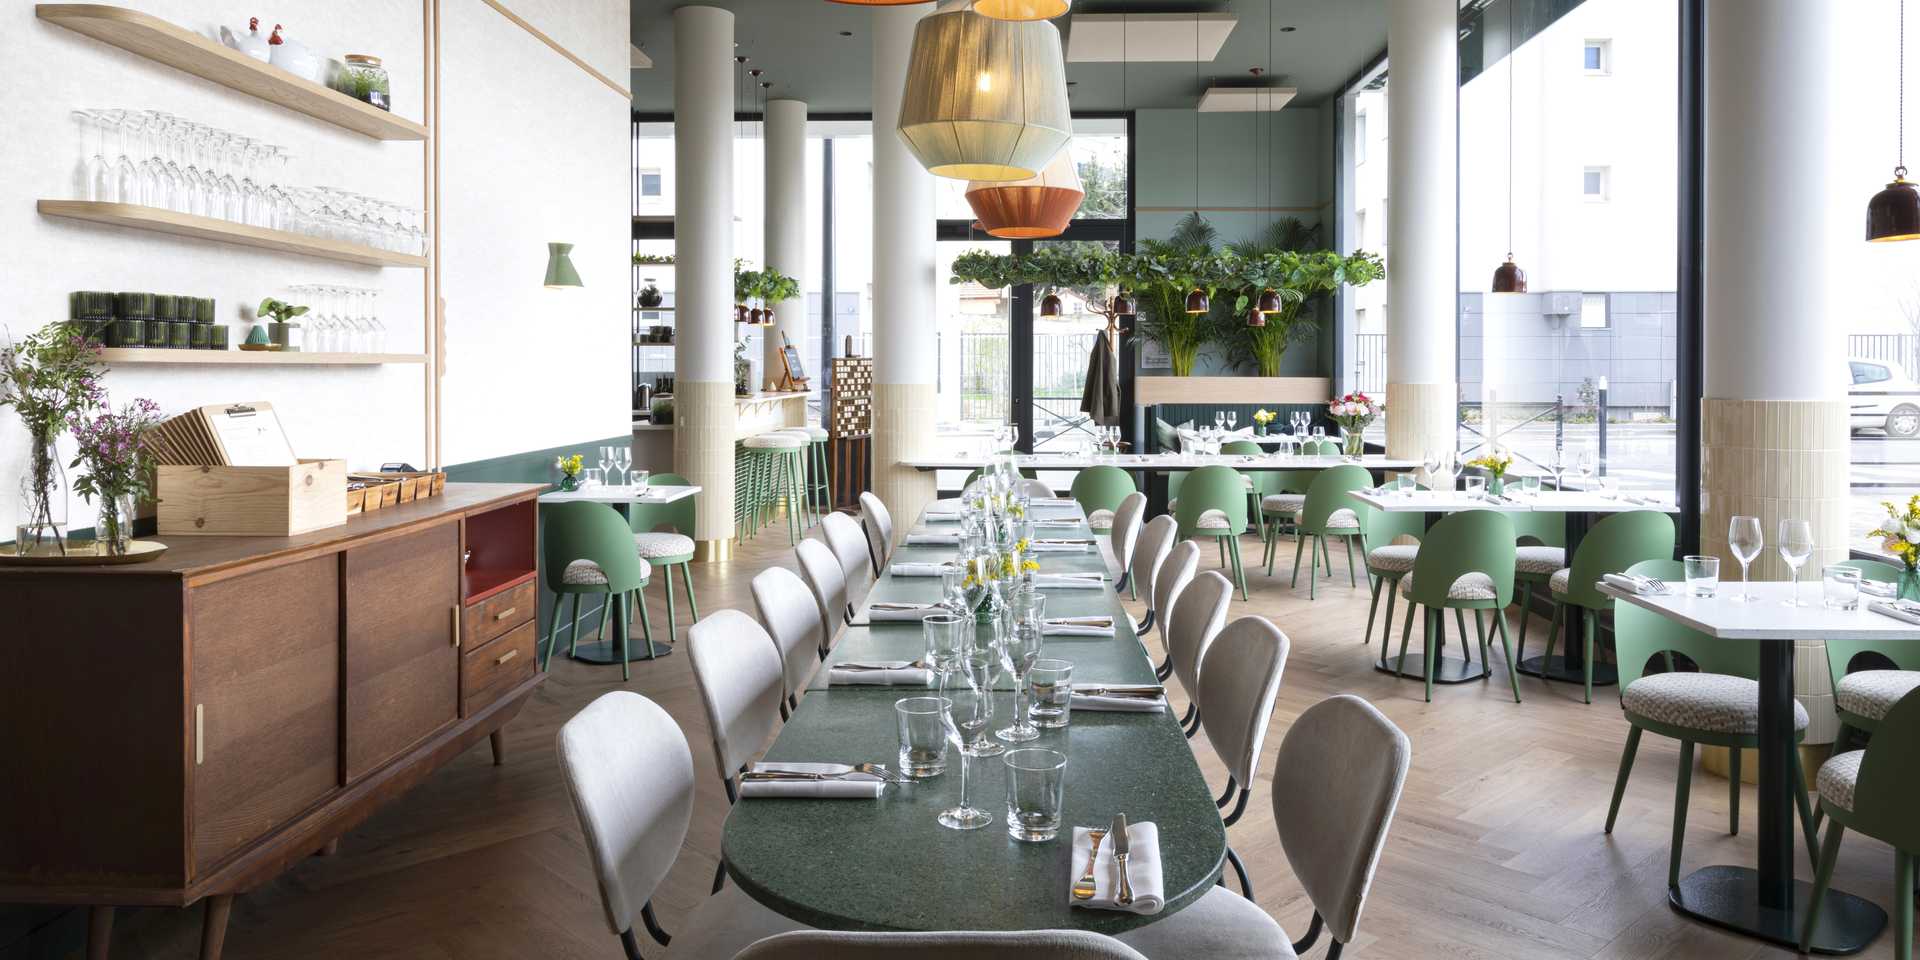 Restaurant designed by an architect in Loire-Atlantique (44)